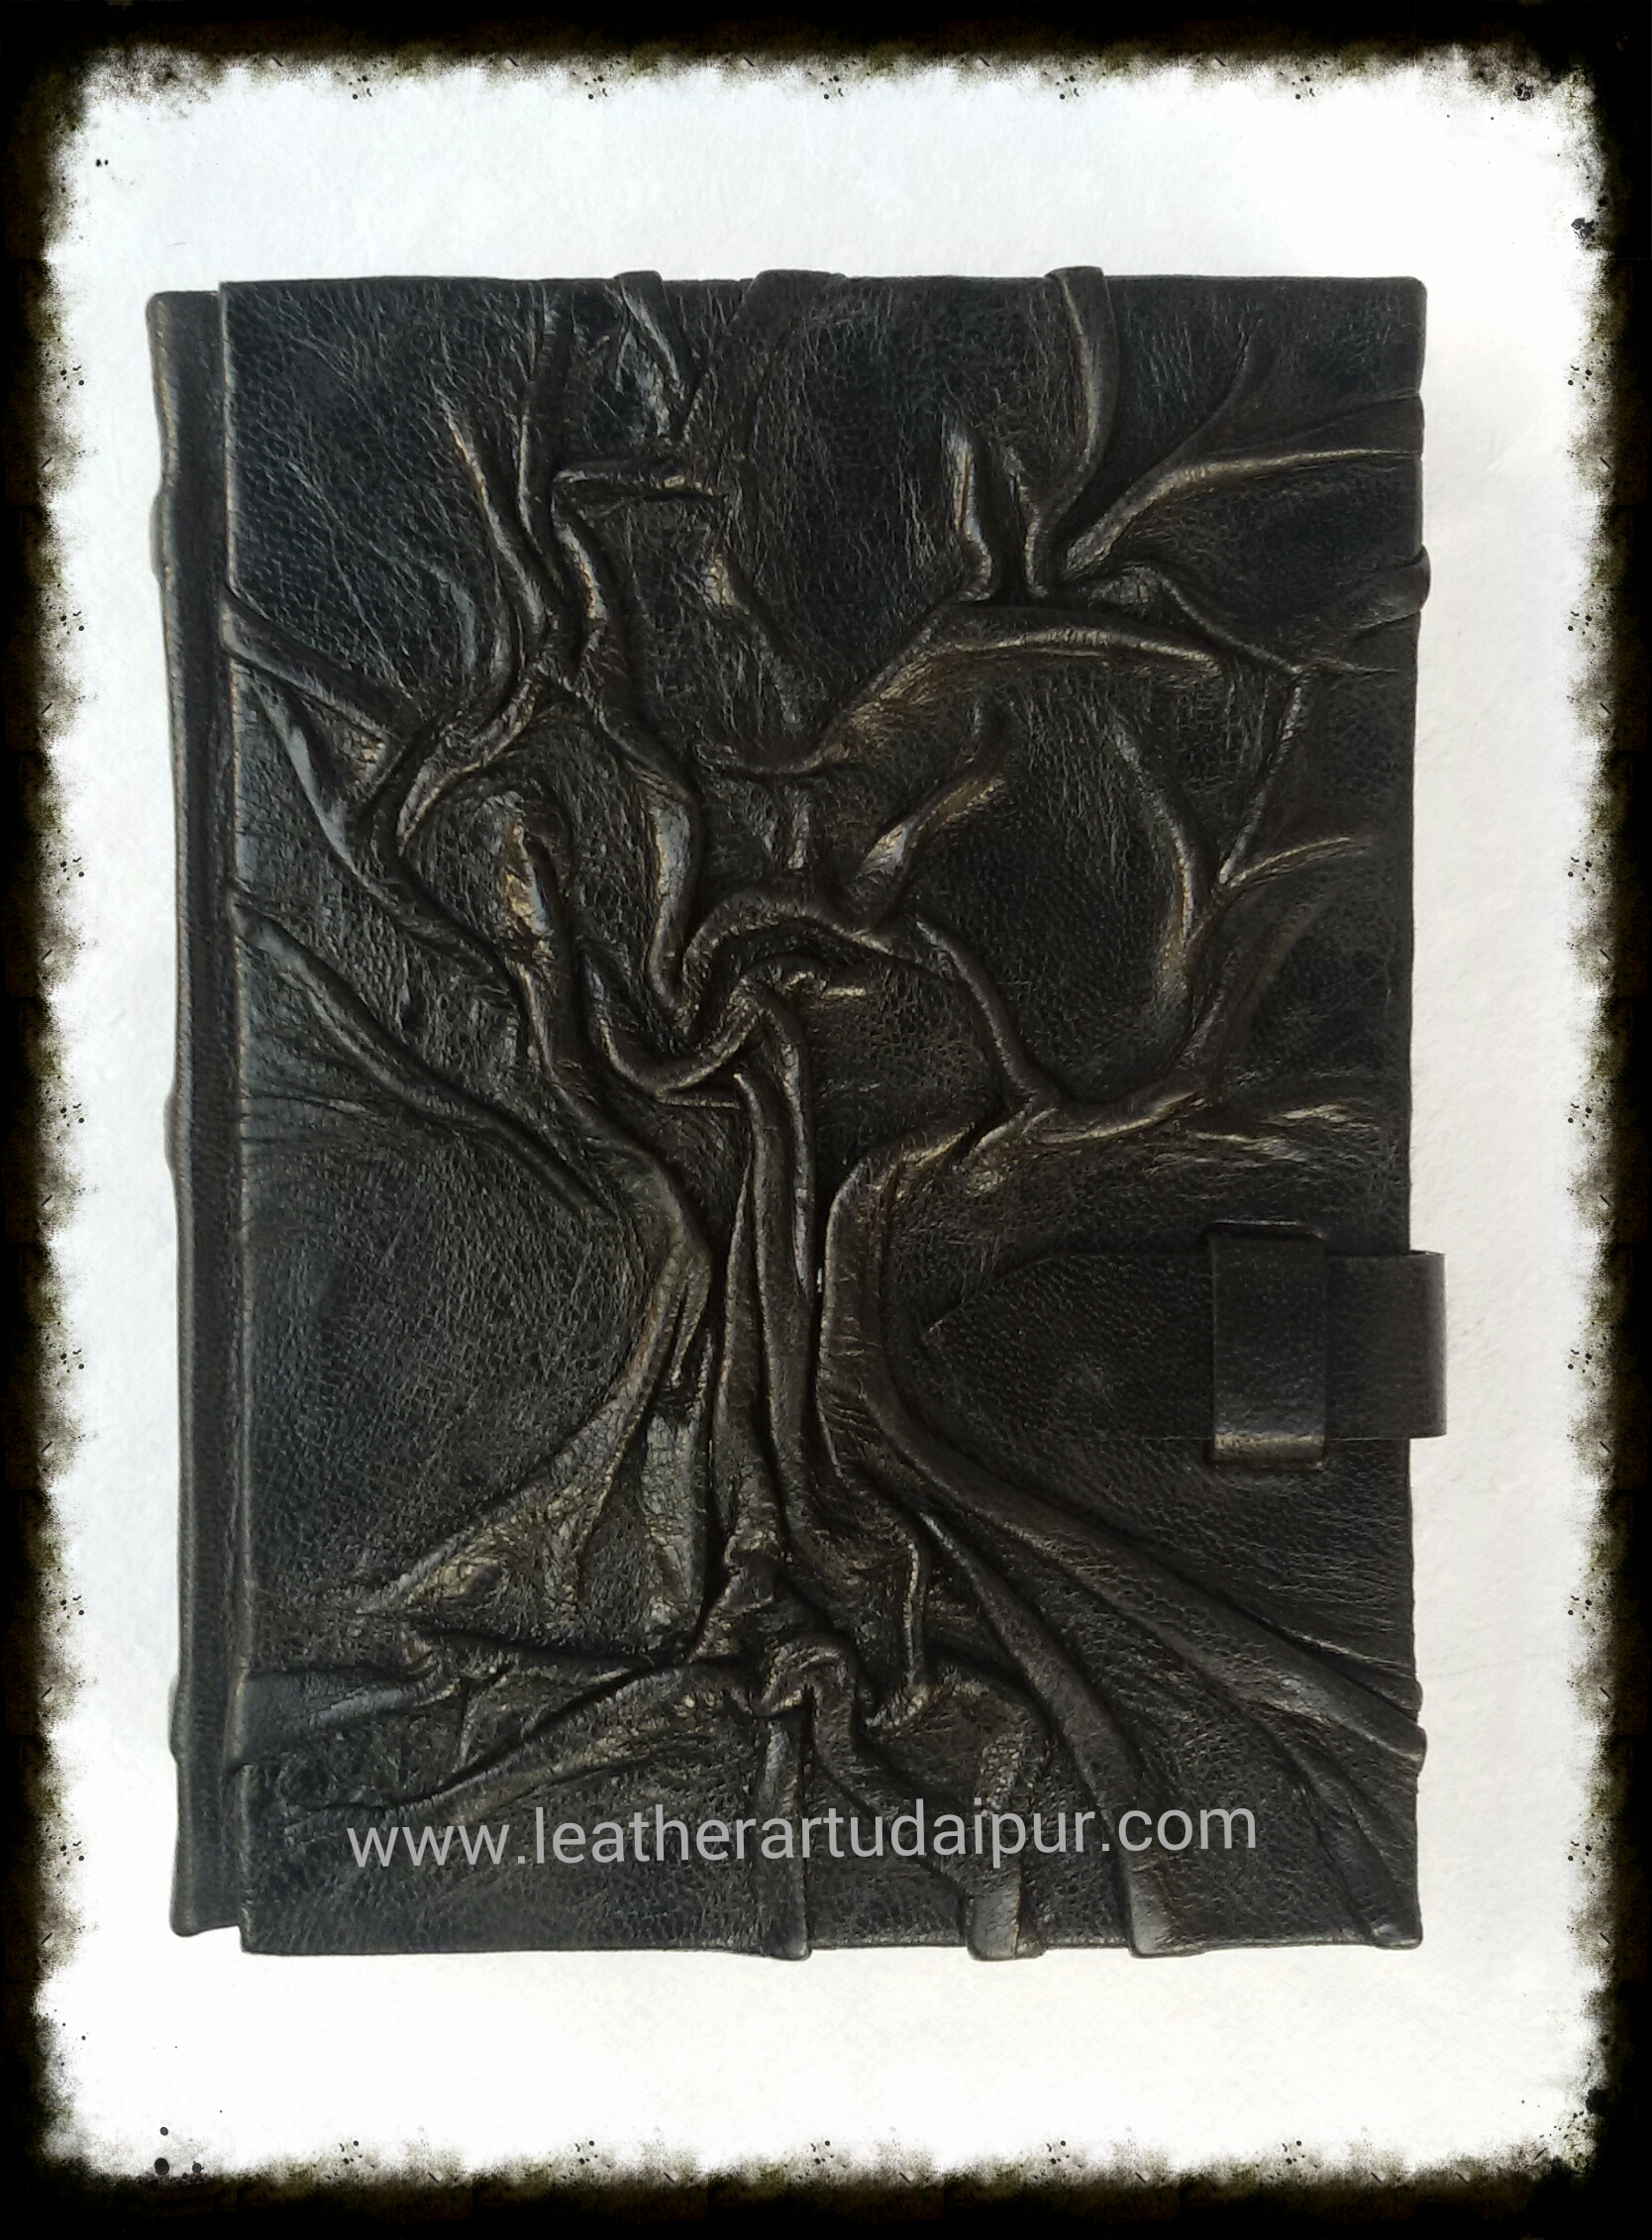 Handmade tree leather lournal